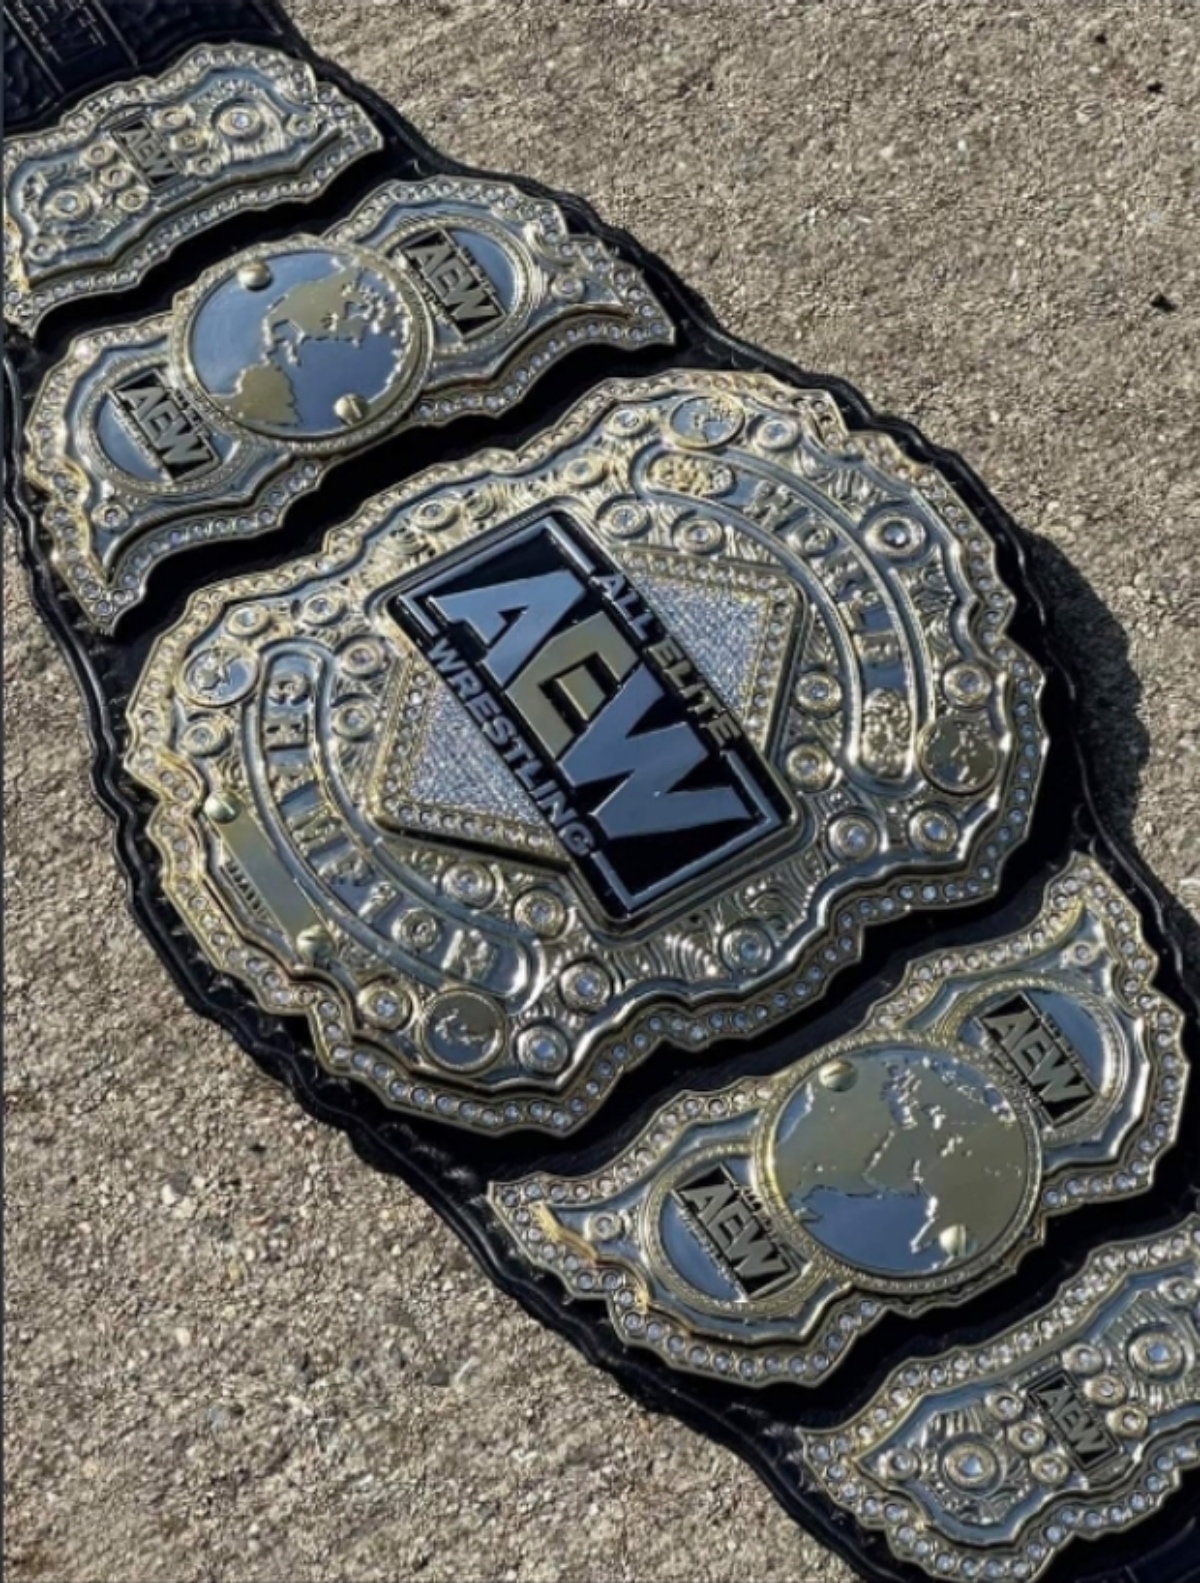 Update On New AEW World Title Belt Cultaholic Wrestling